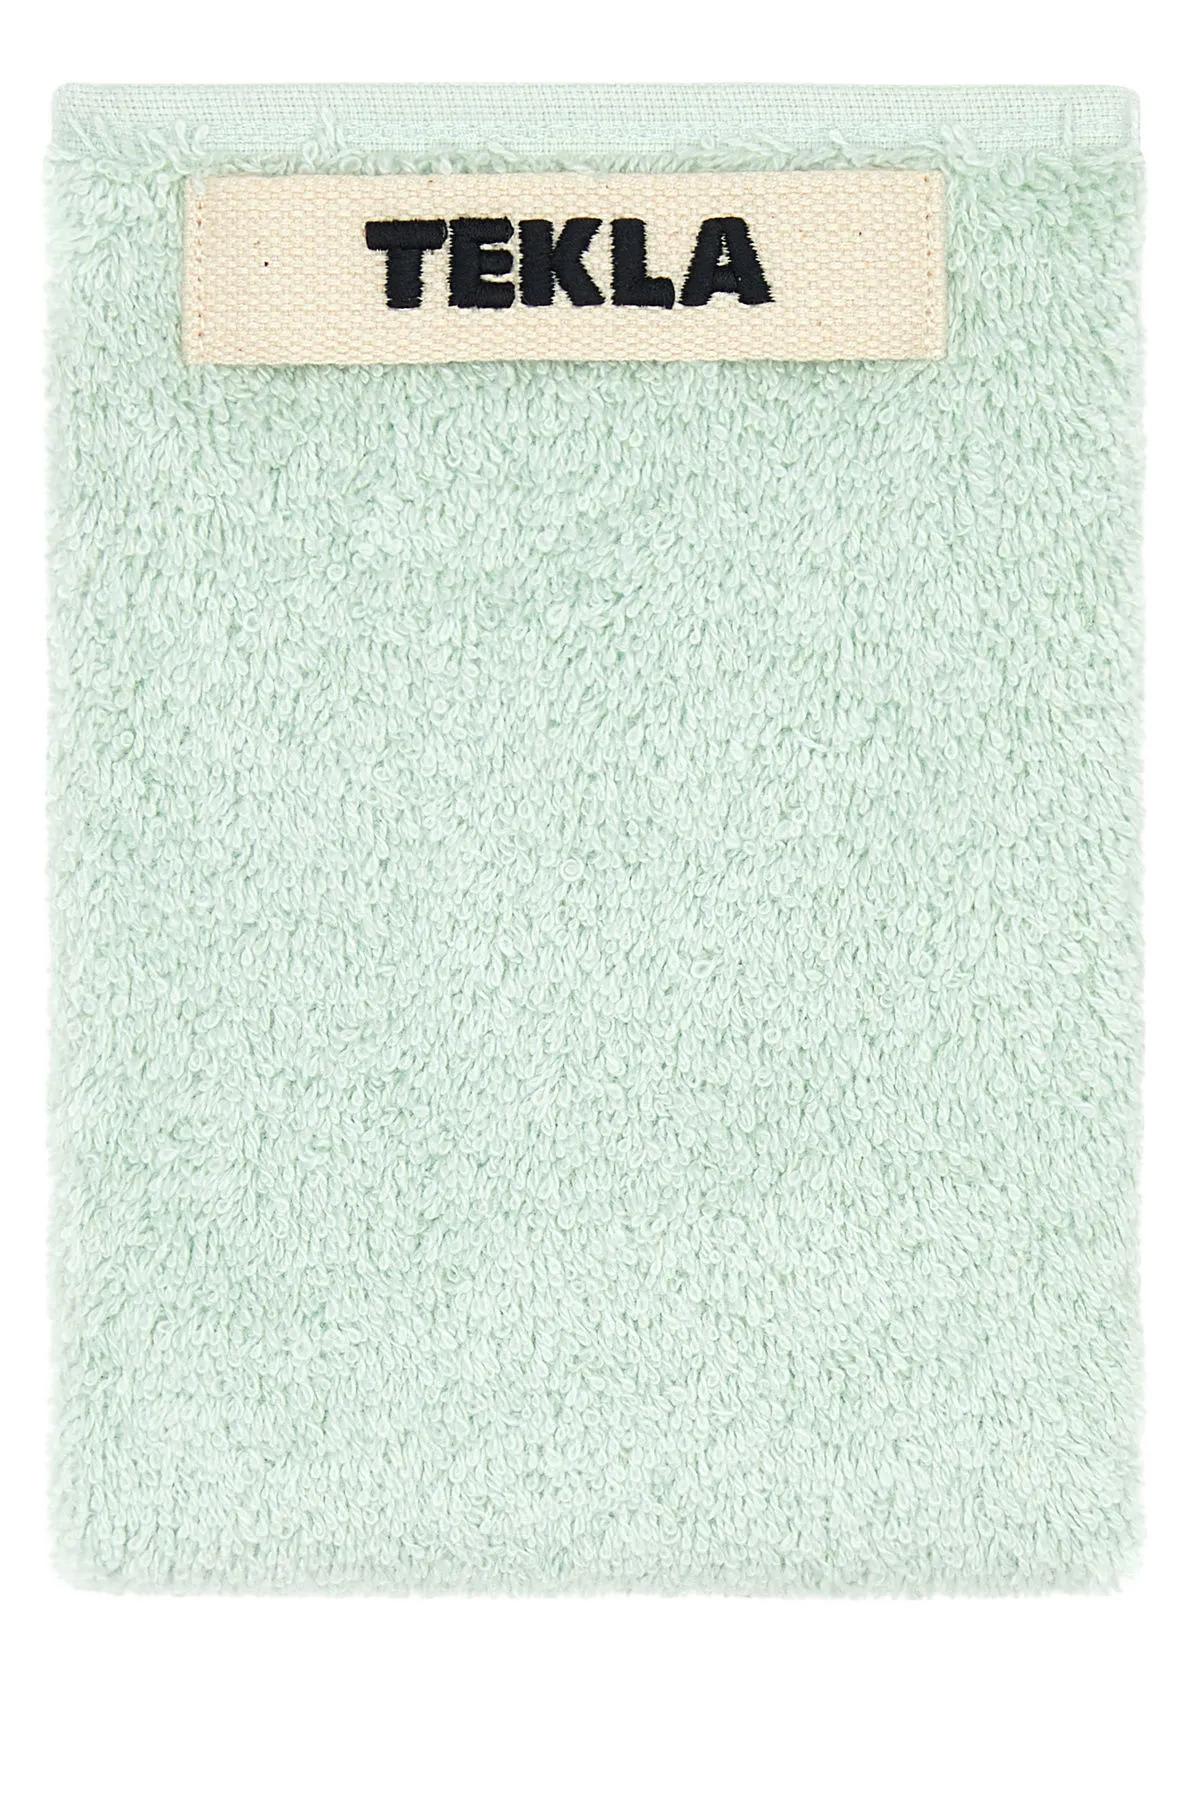 Tekla Mint Green Terry Towel